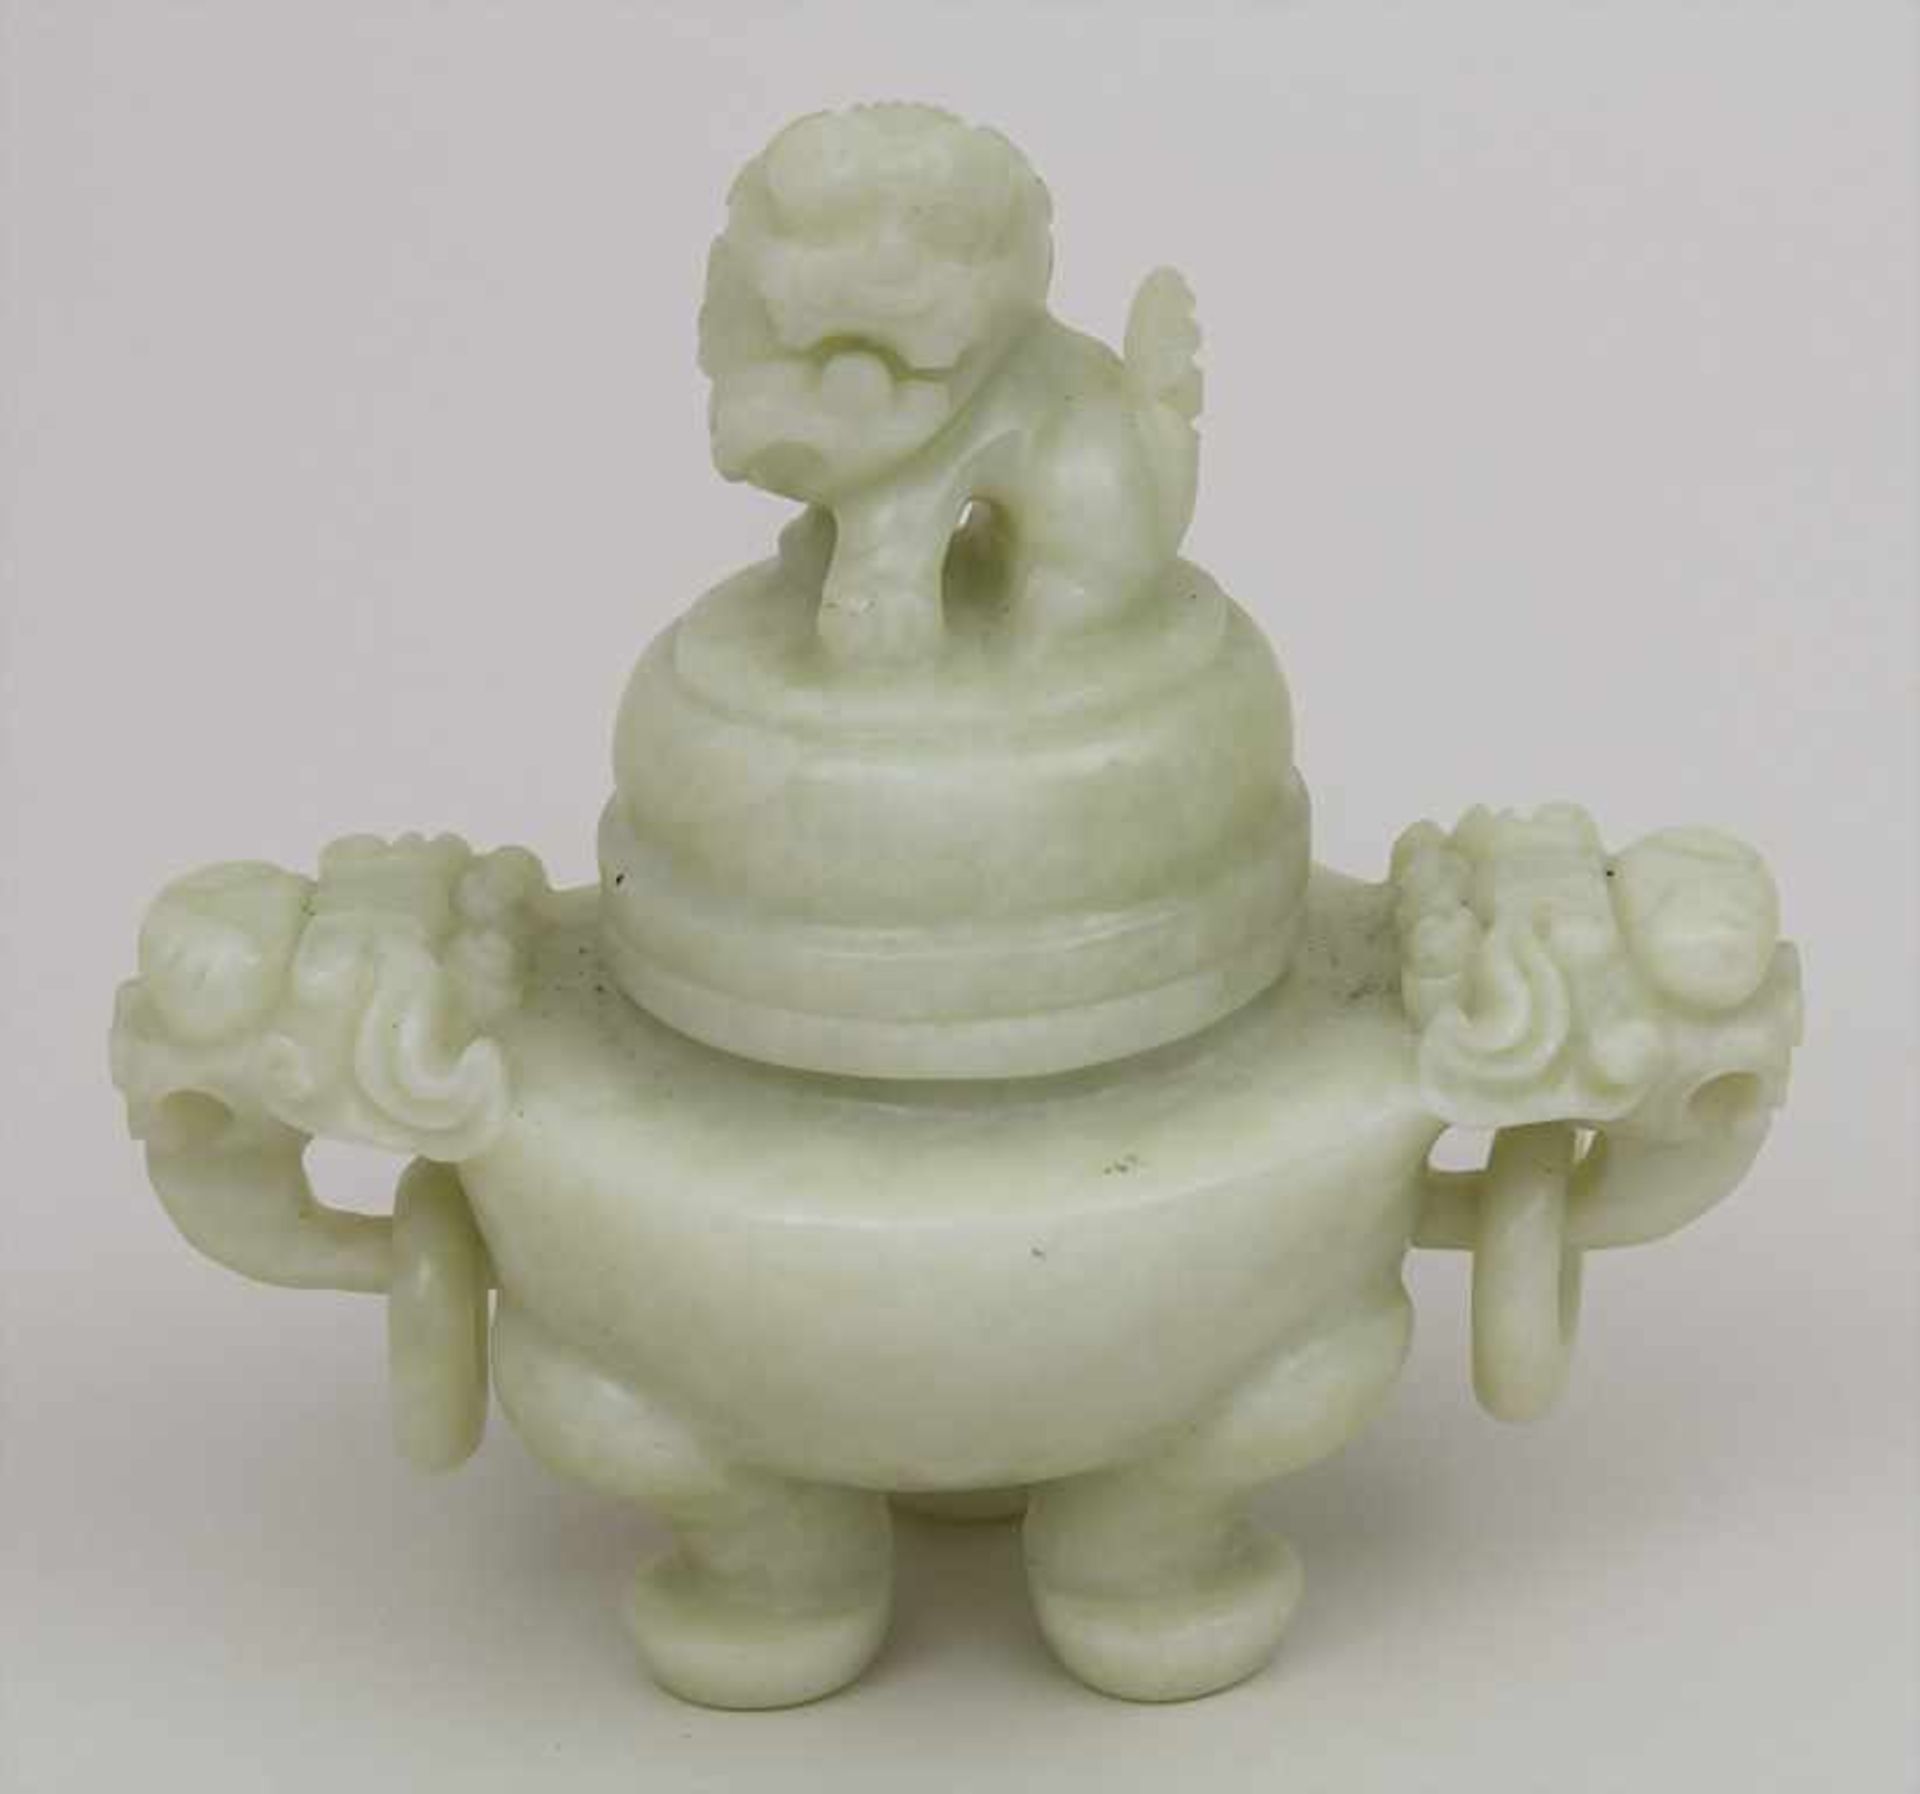 Jade-Deckelgefäß mit Fo-Hund / A jade vessel with Fo-hound, China, 20. Jh. Material: Jade,